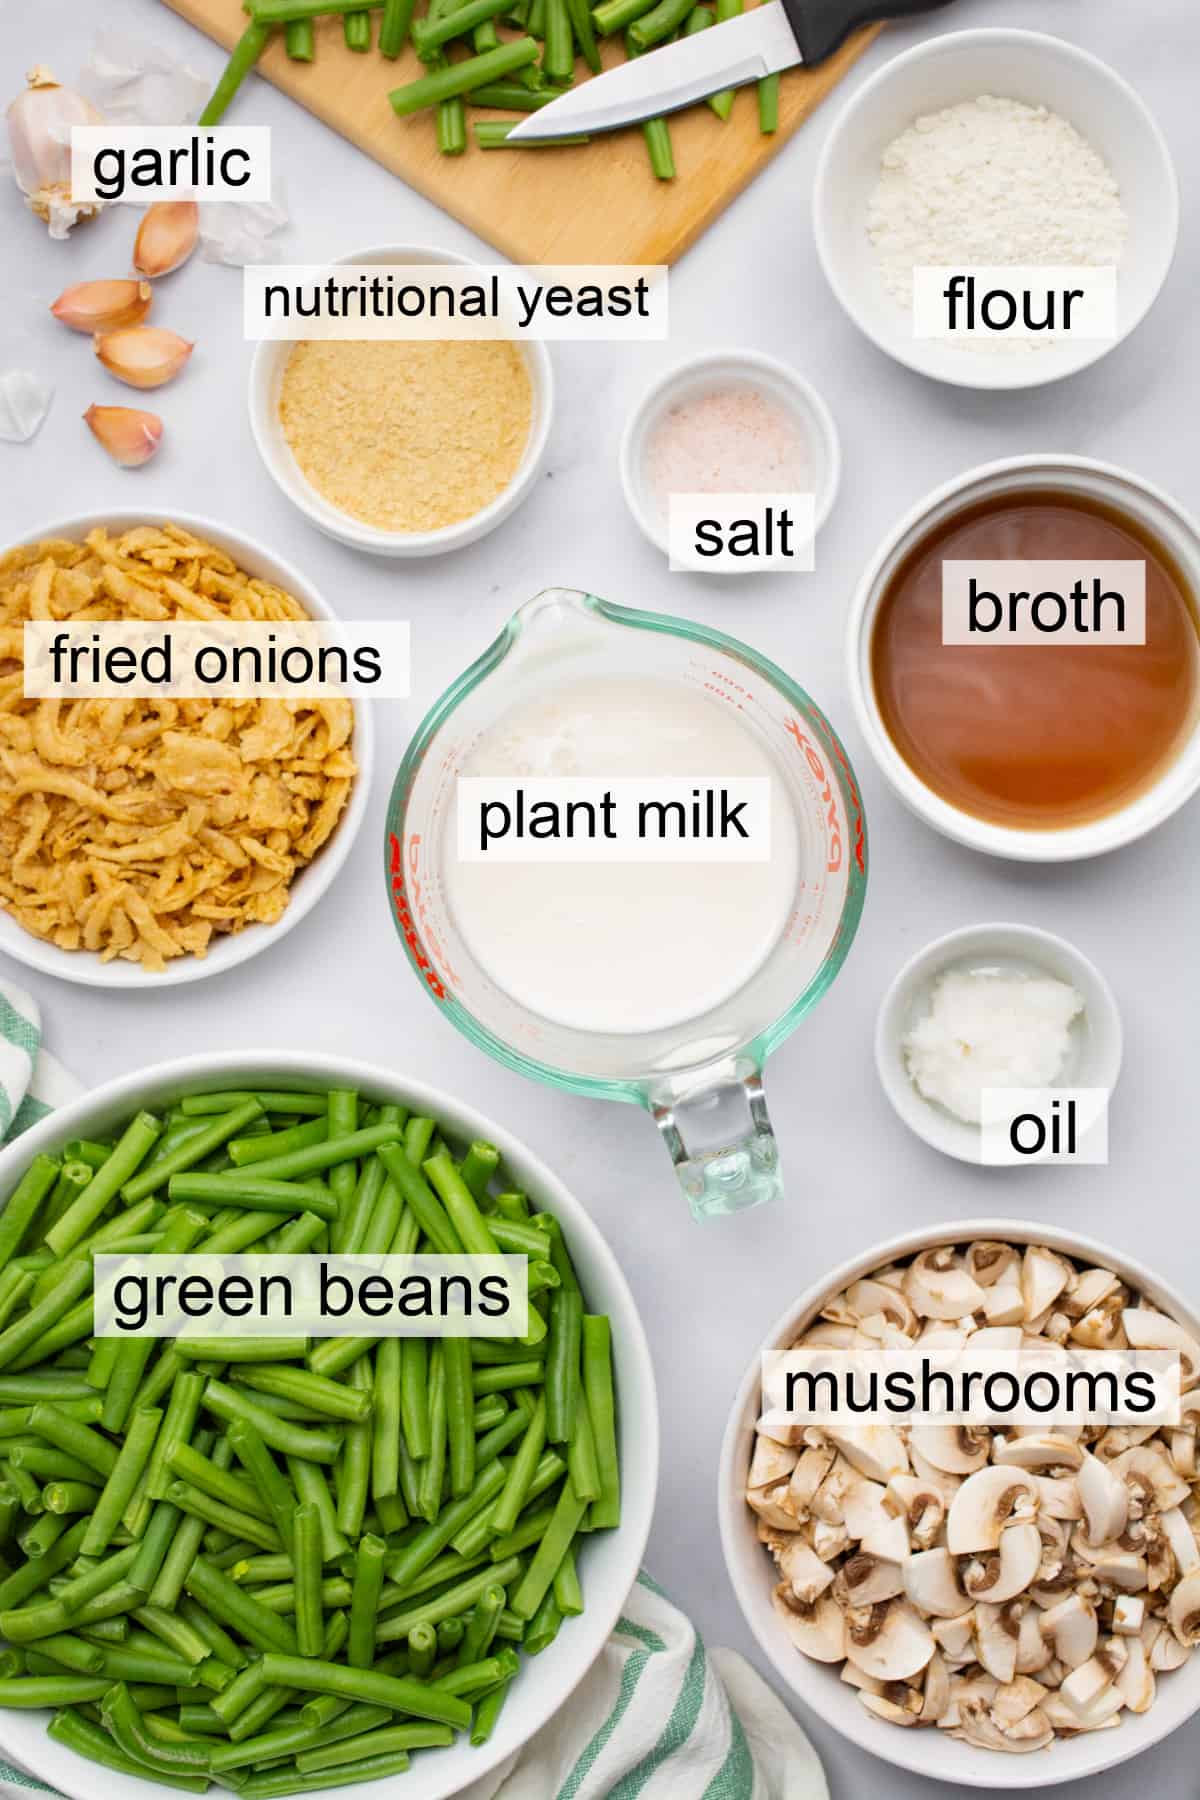 Ingredients in separate bowls to make vegan green bean casserole.